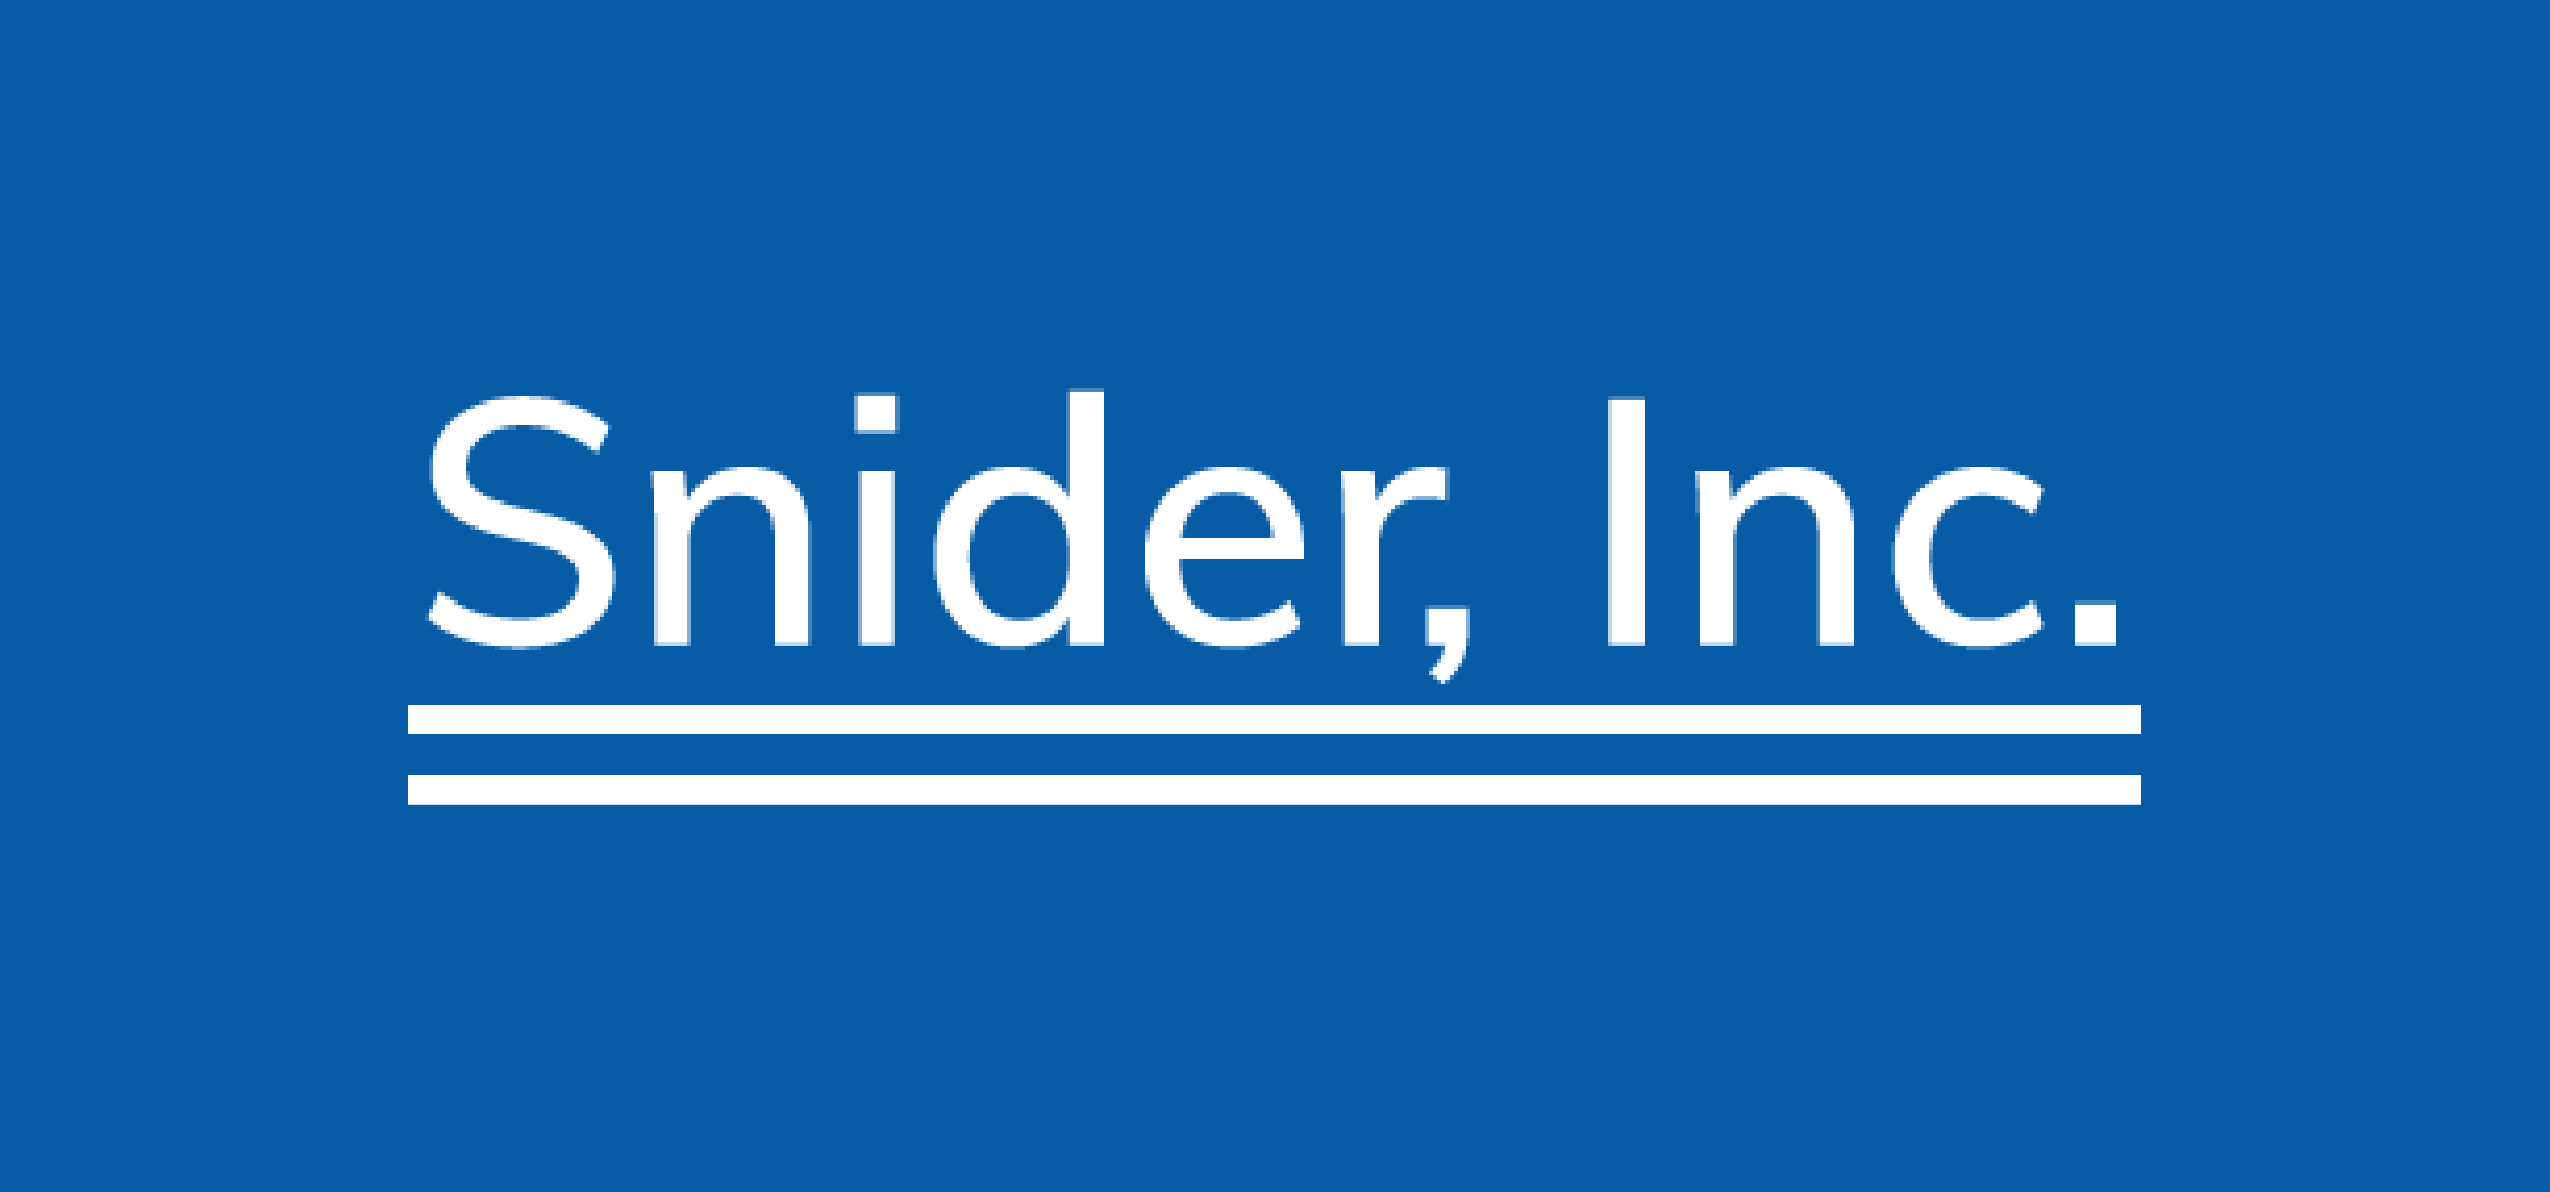 Snider Inc